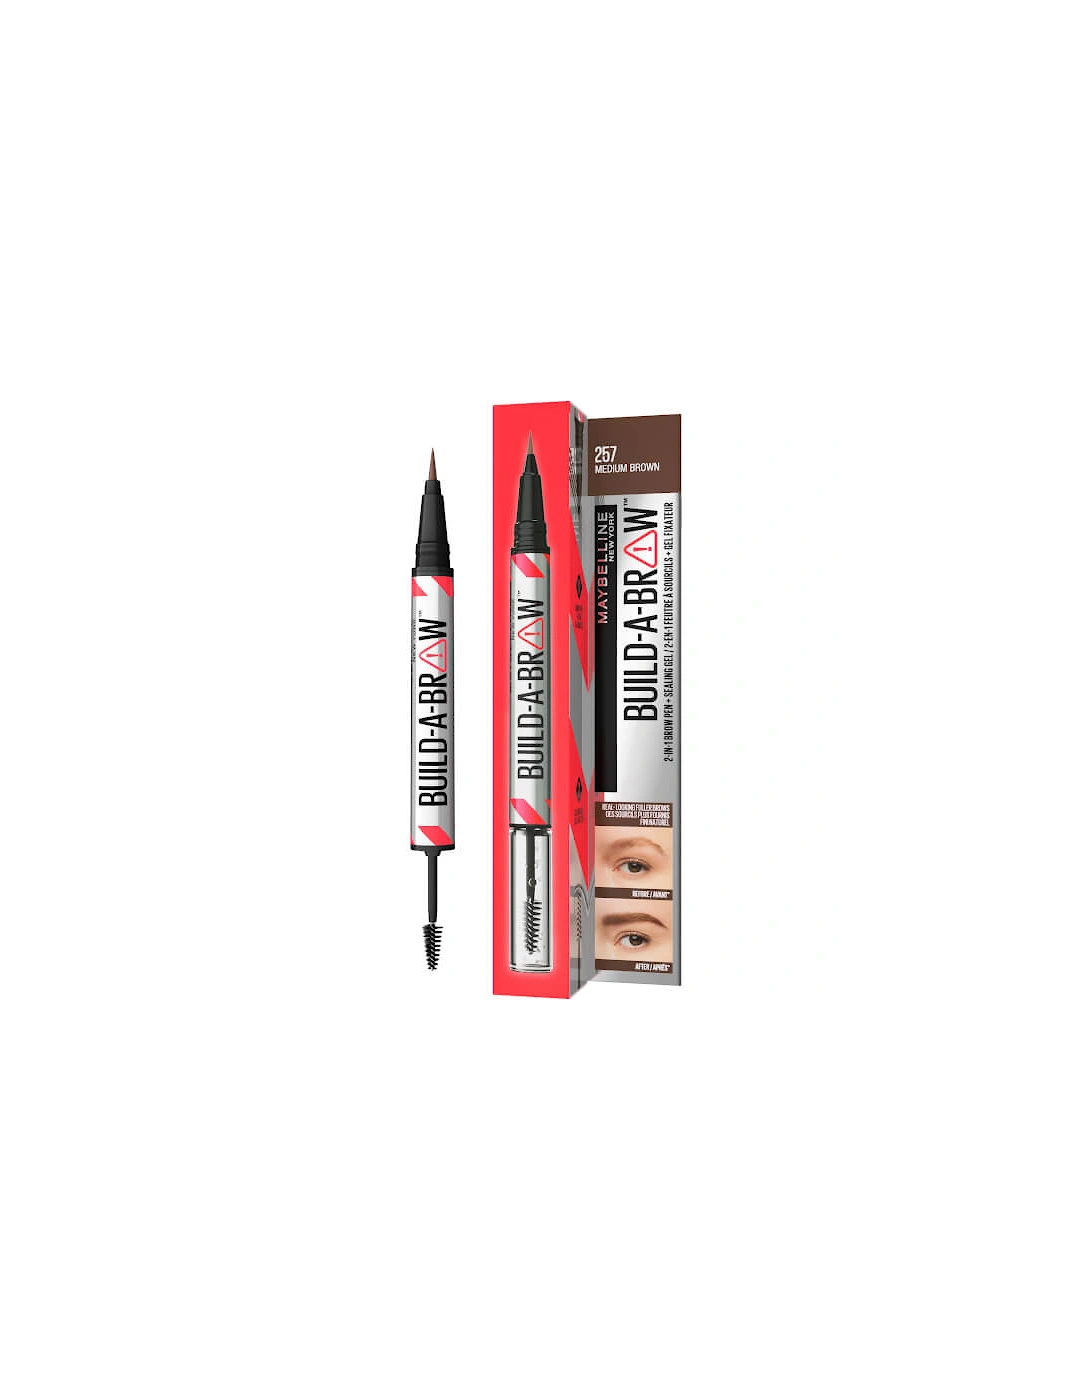 Build-A-Brow 2 Easy Steps Eye Brow Pencil and Gel - Medium Brown, 2 of 1